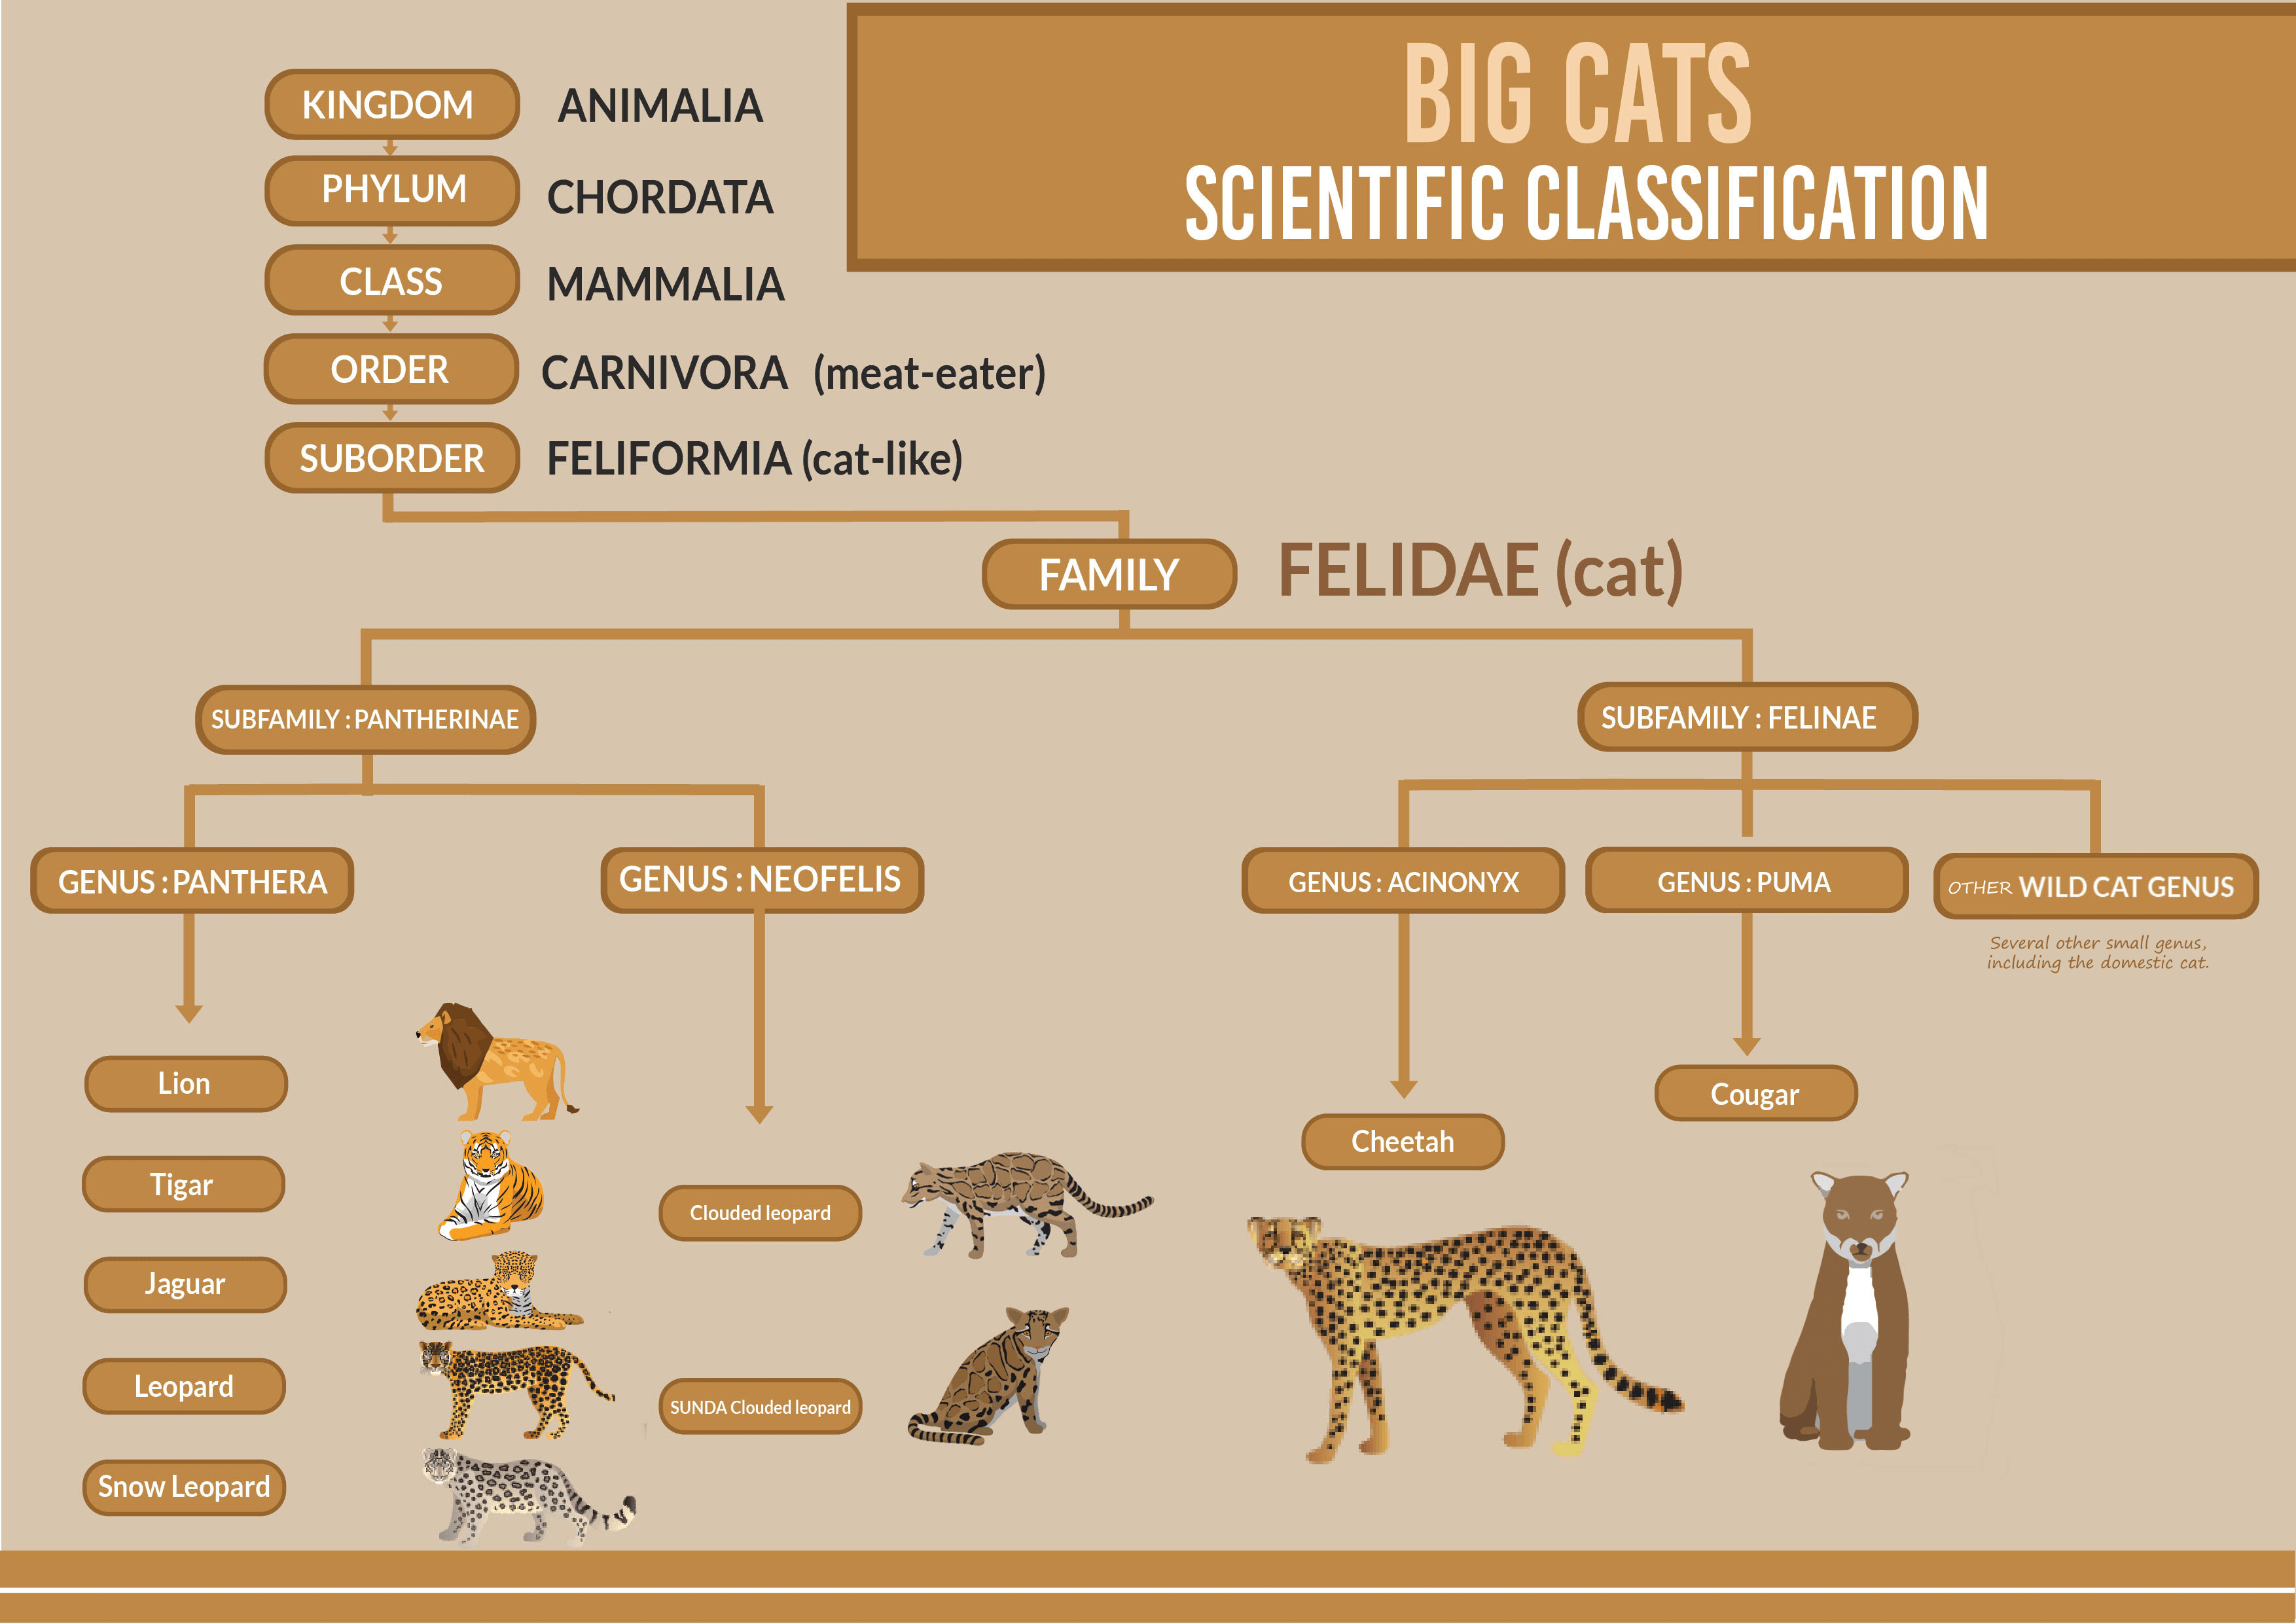 Big Cats Biological Classification | Taxonomy